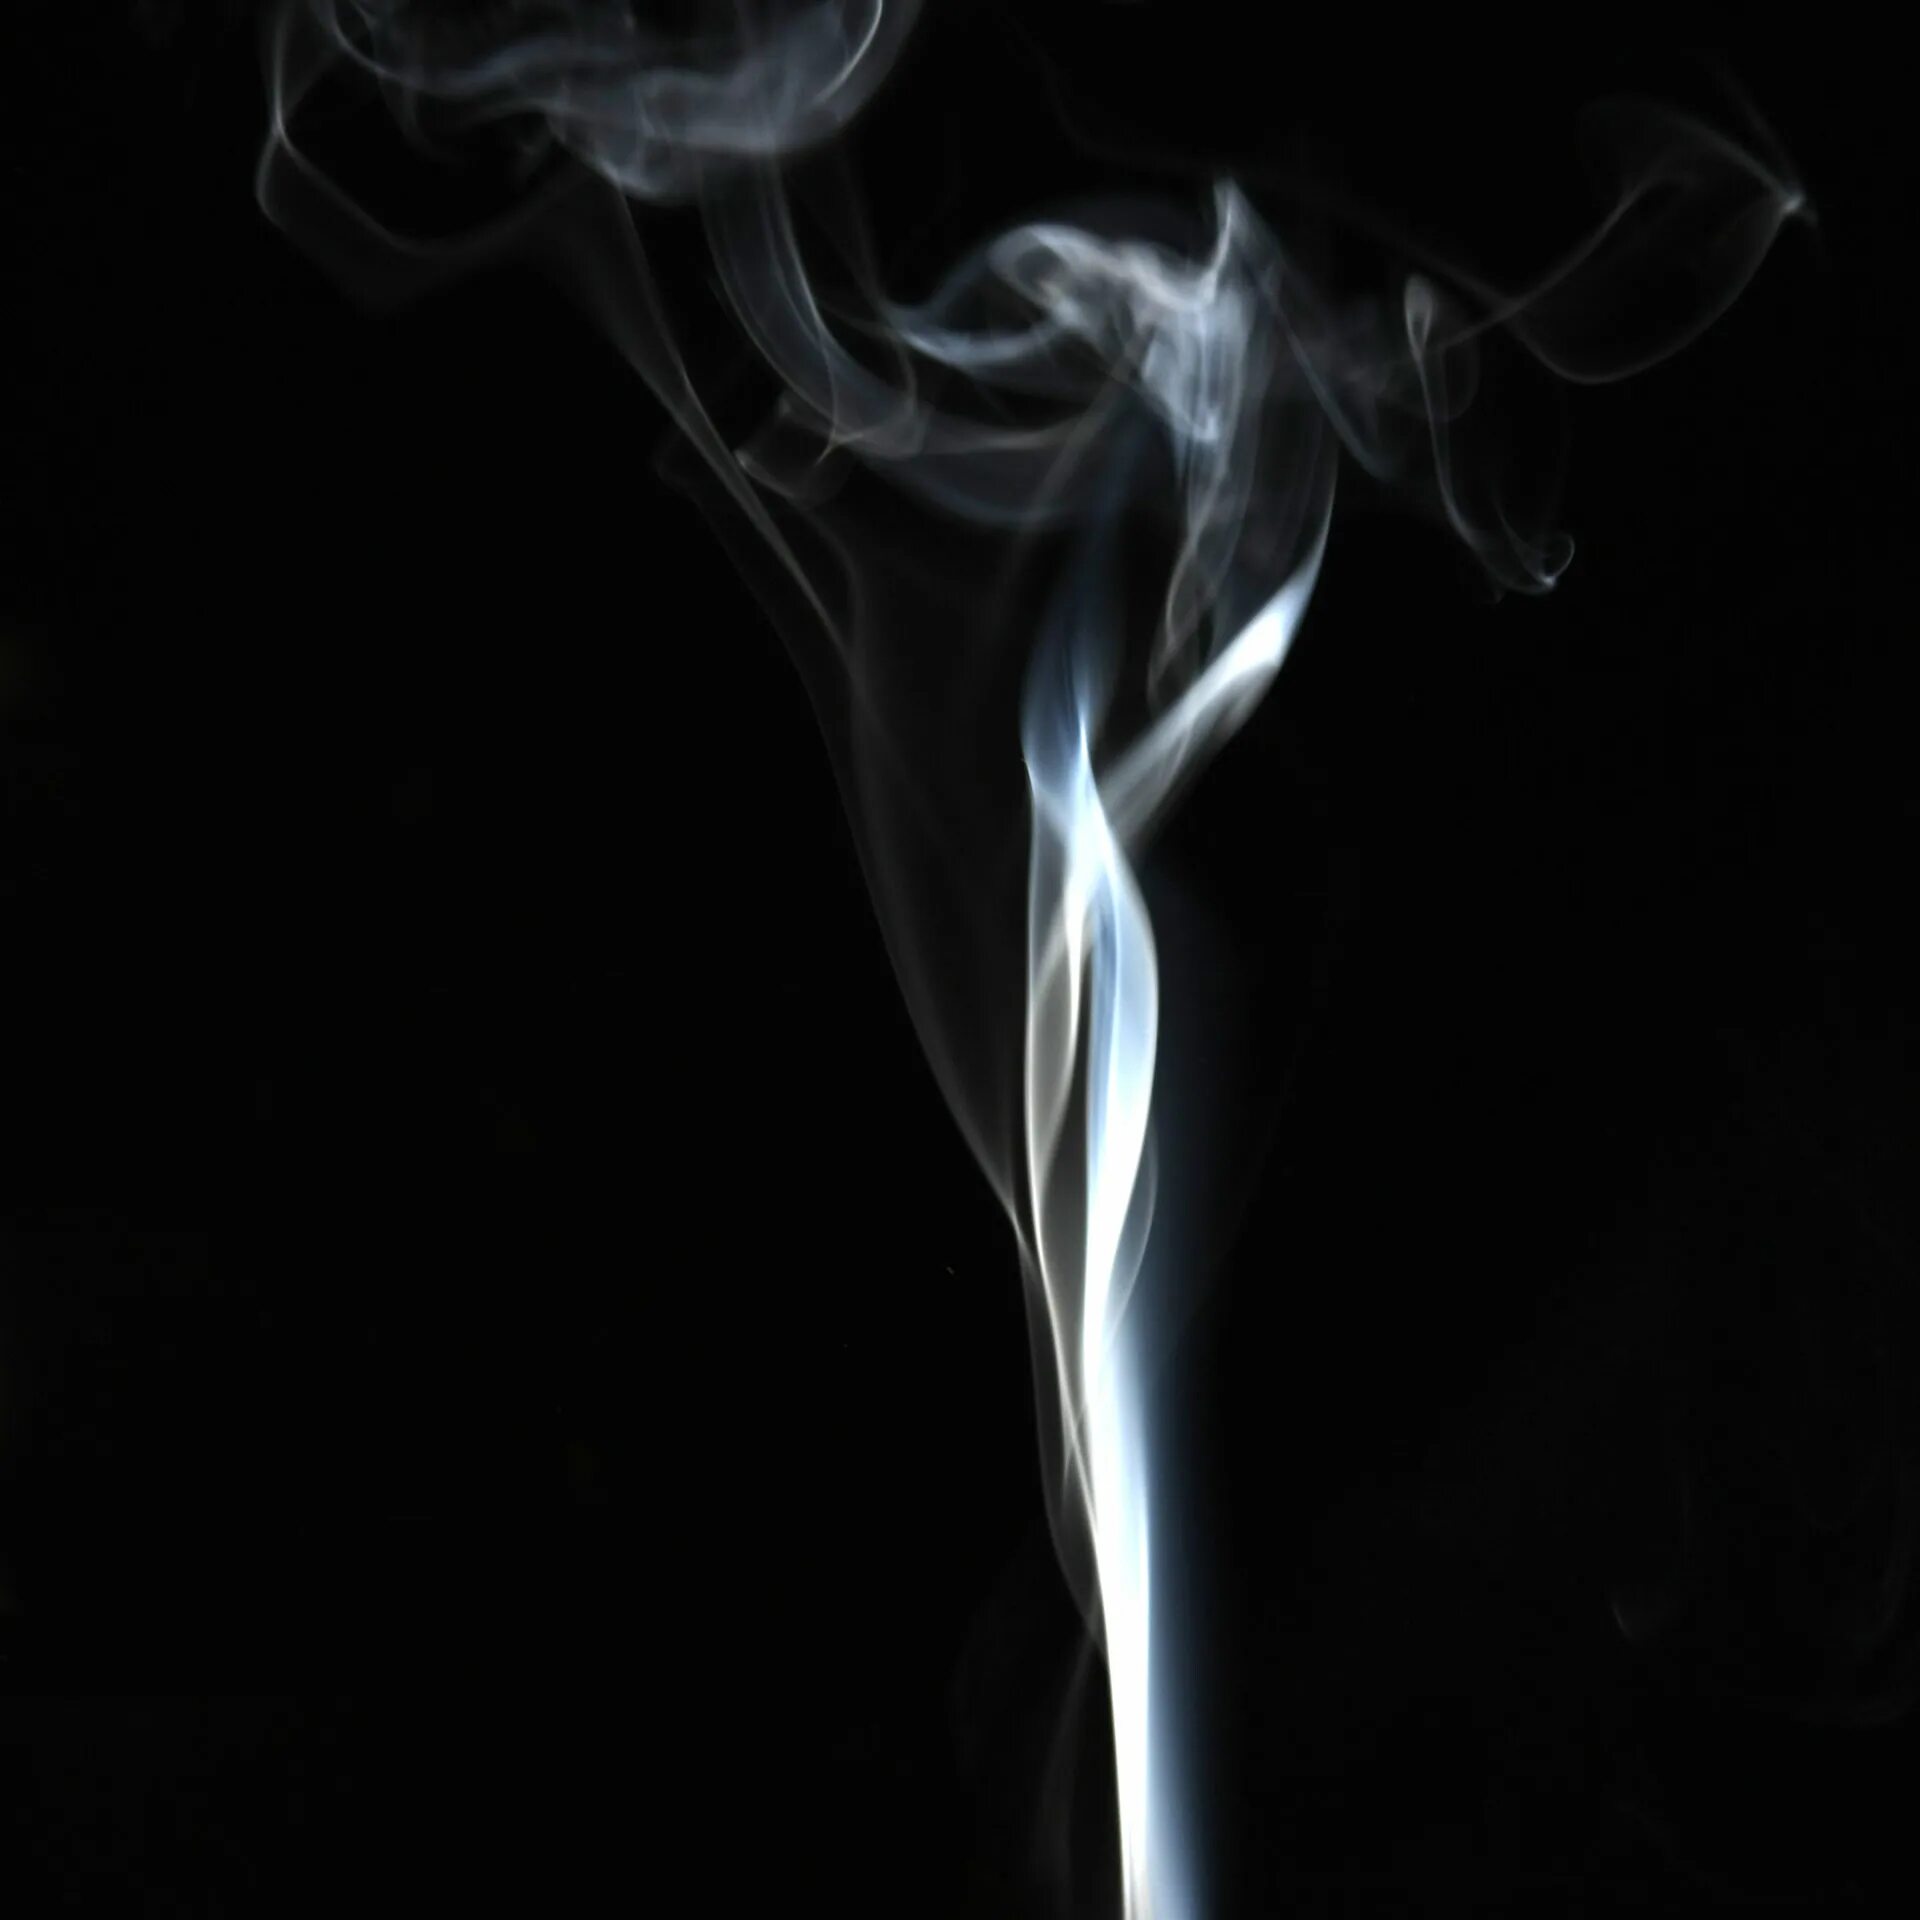 Дым. Дымок от сигареты. Дым от сигарет. Дым на черном фоне. Дым сигарет минус